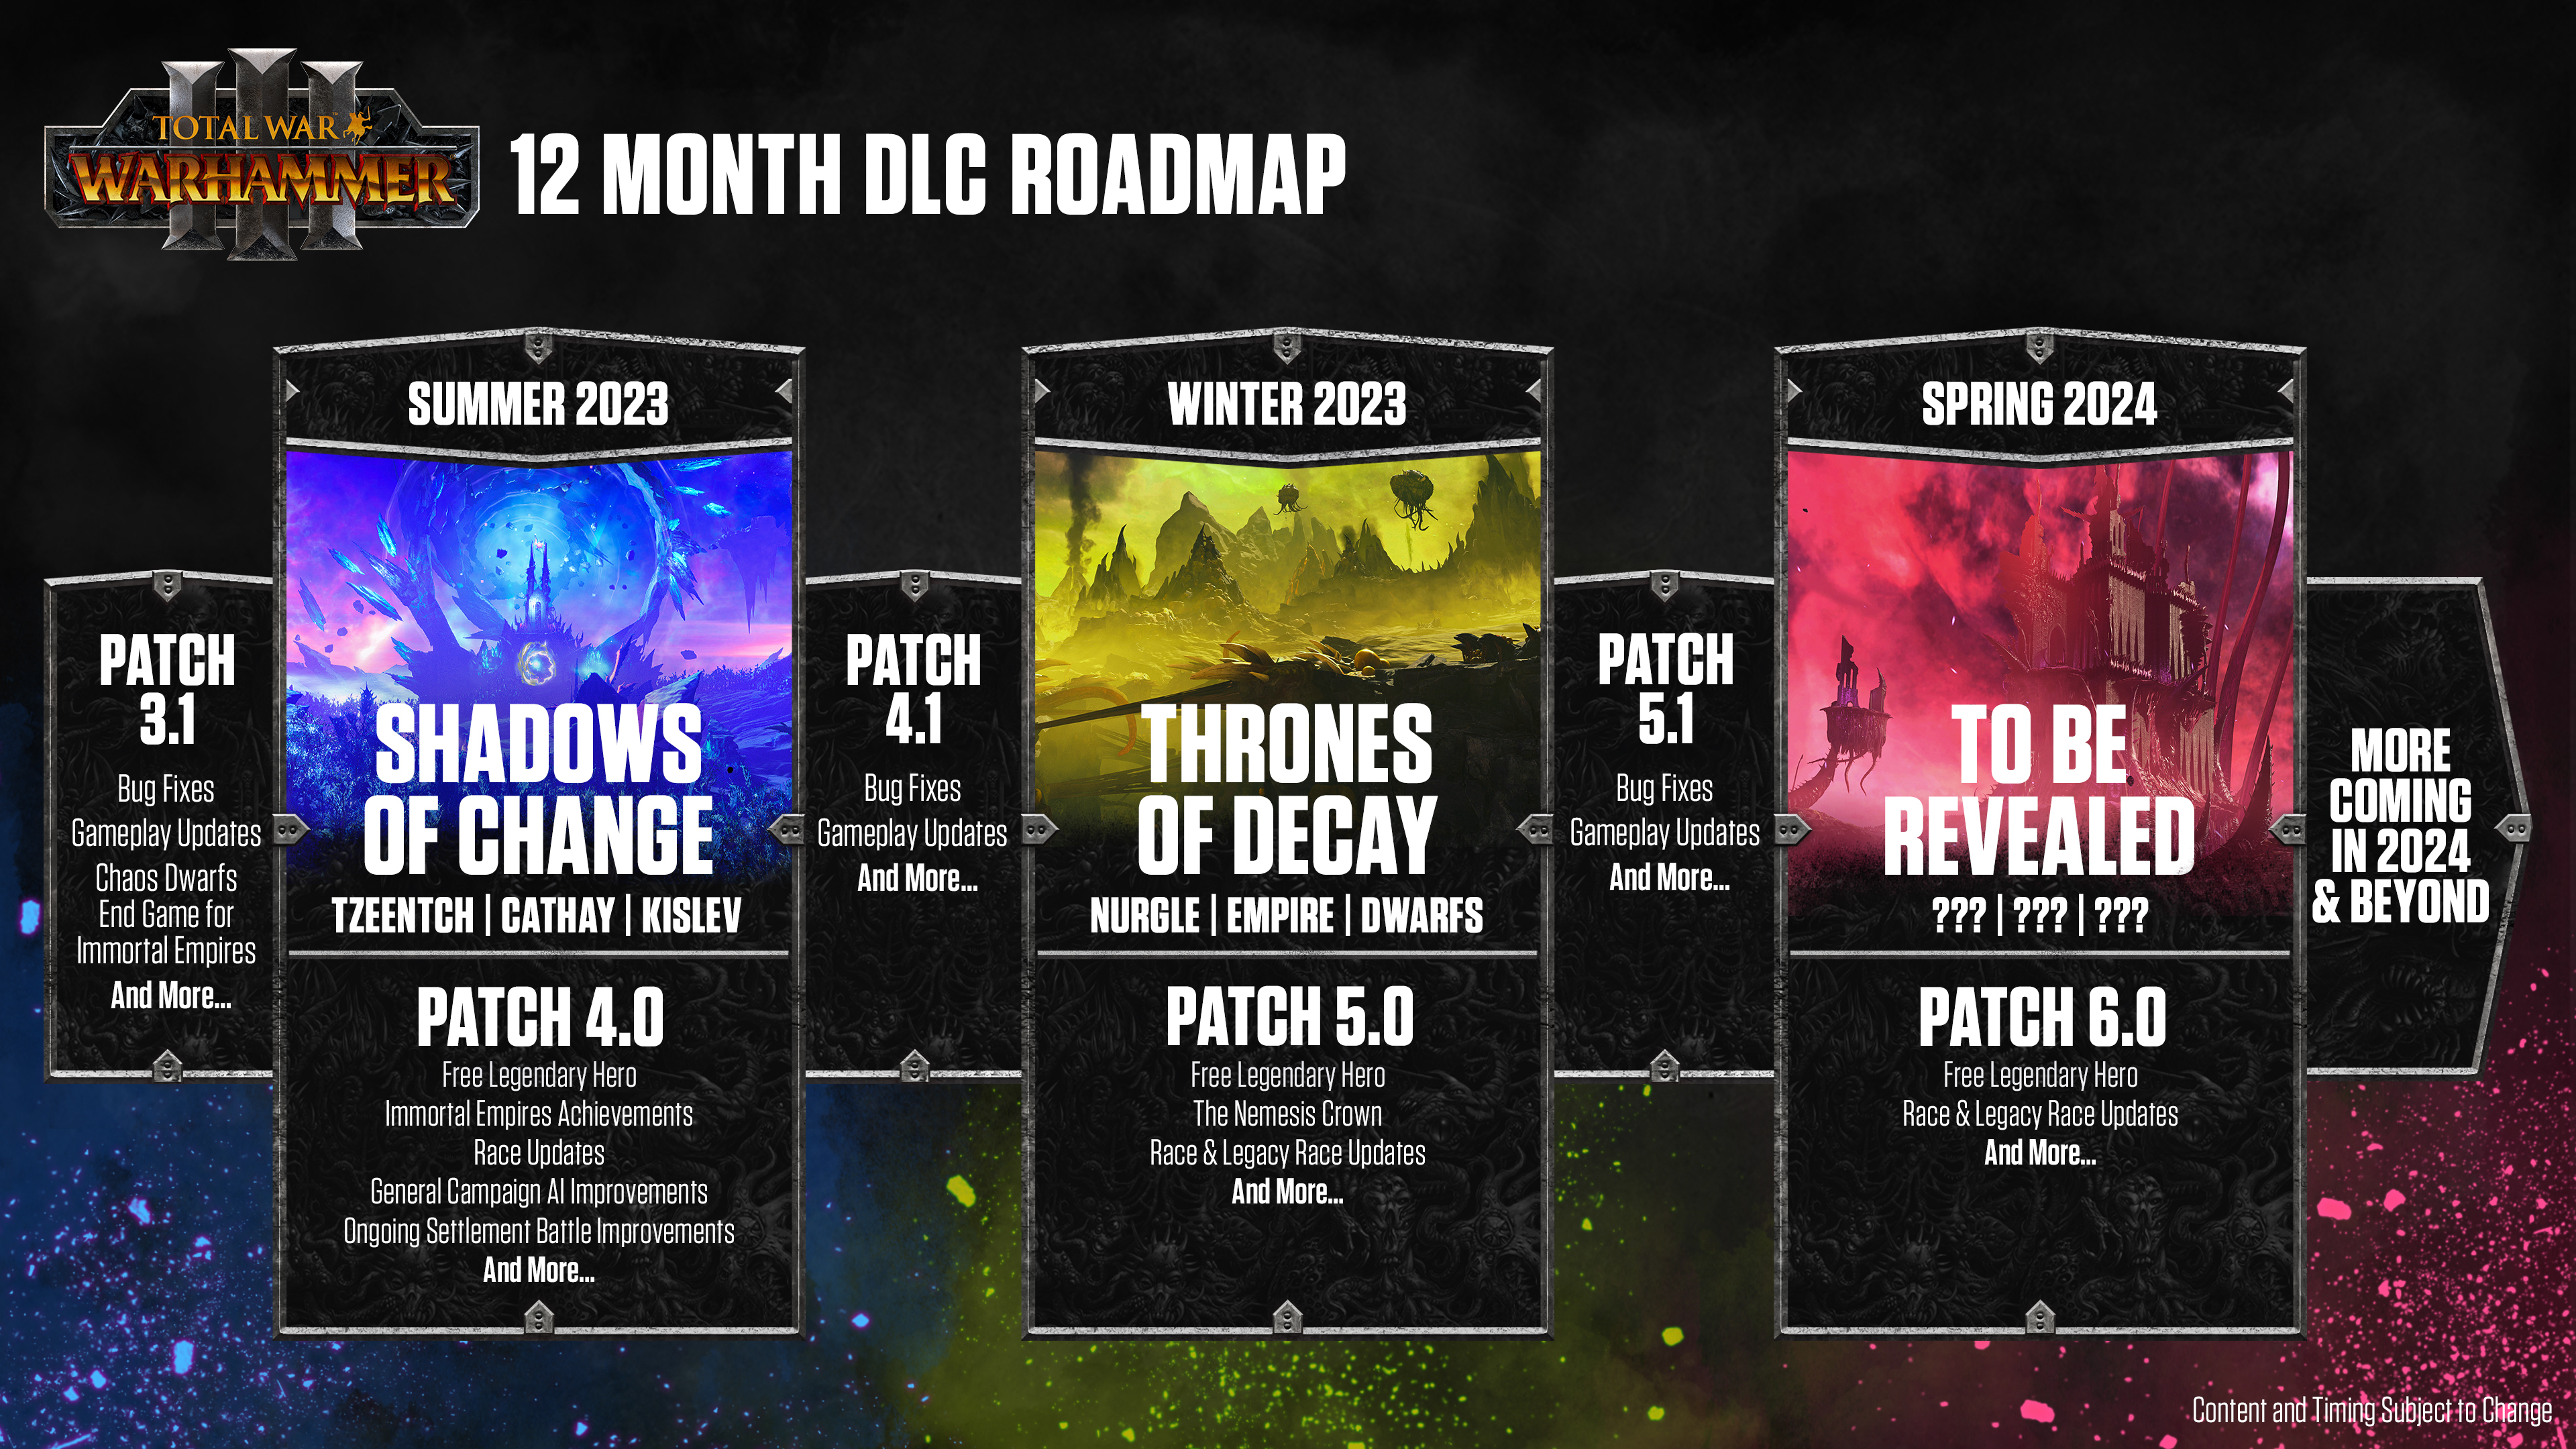 Total War: Warhammer 3's DLC roadmap